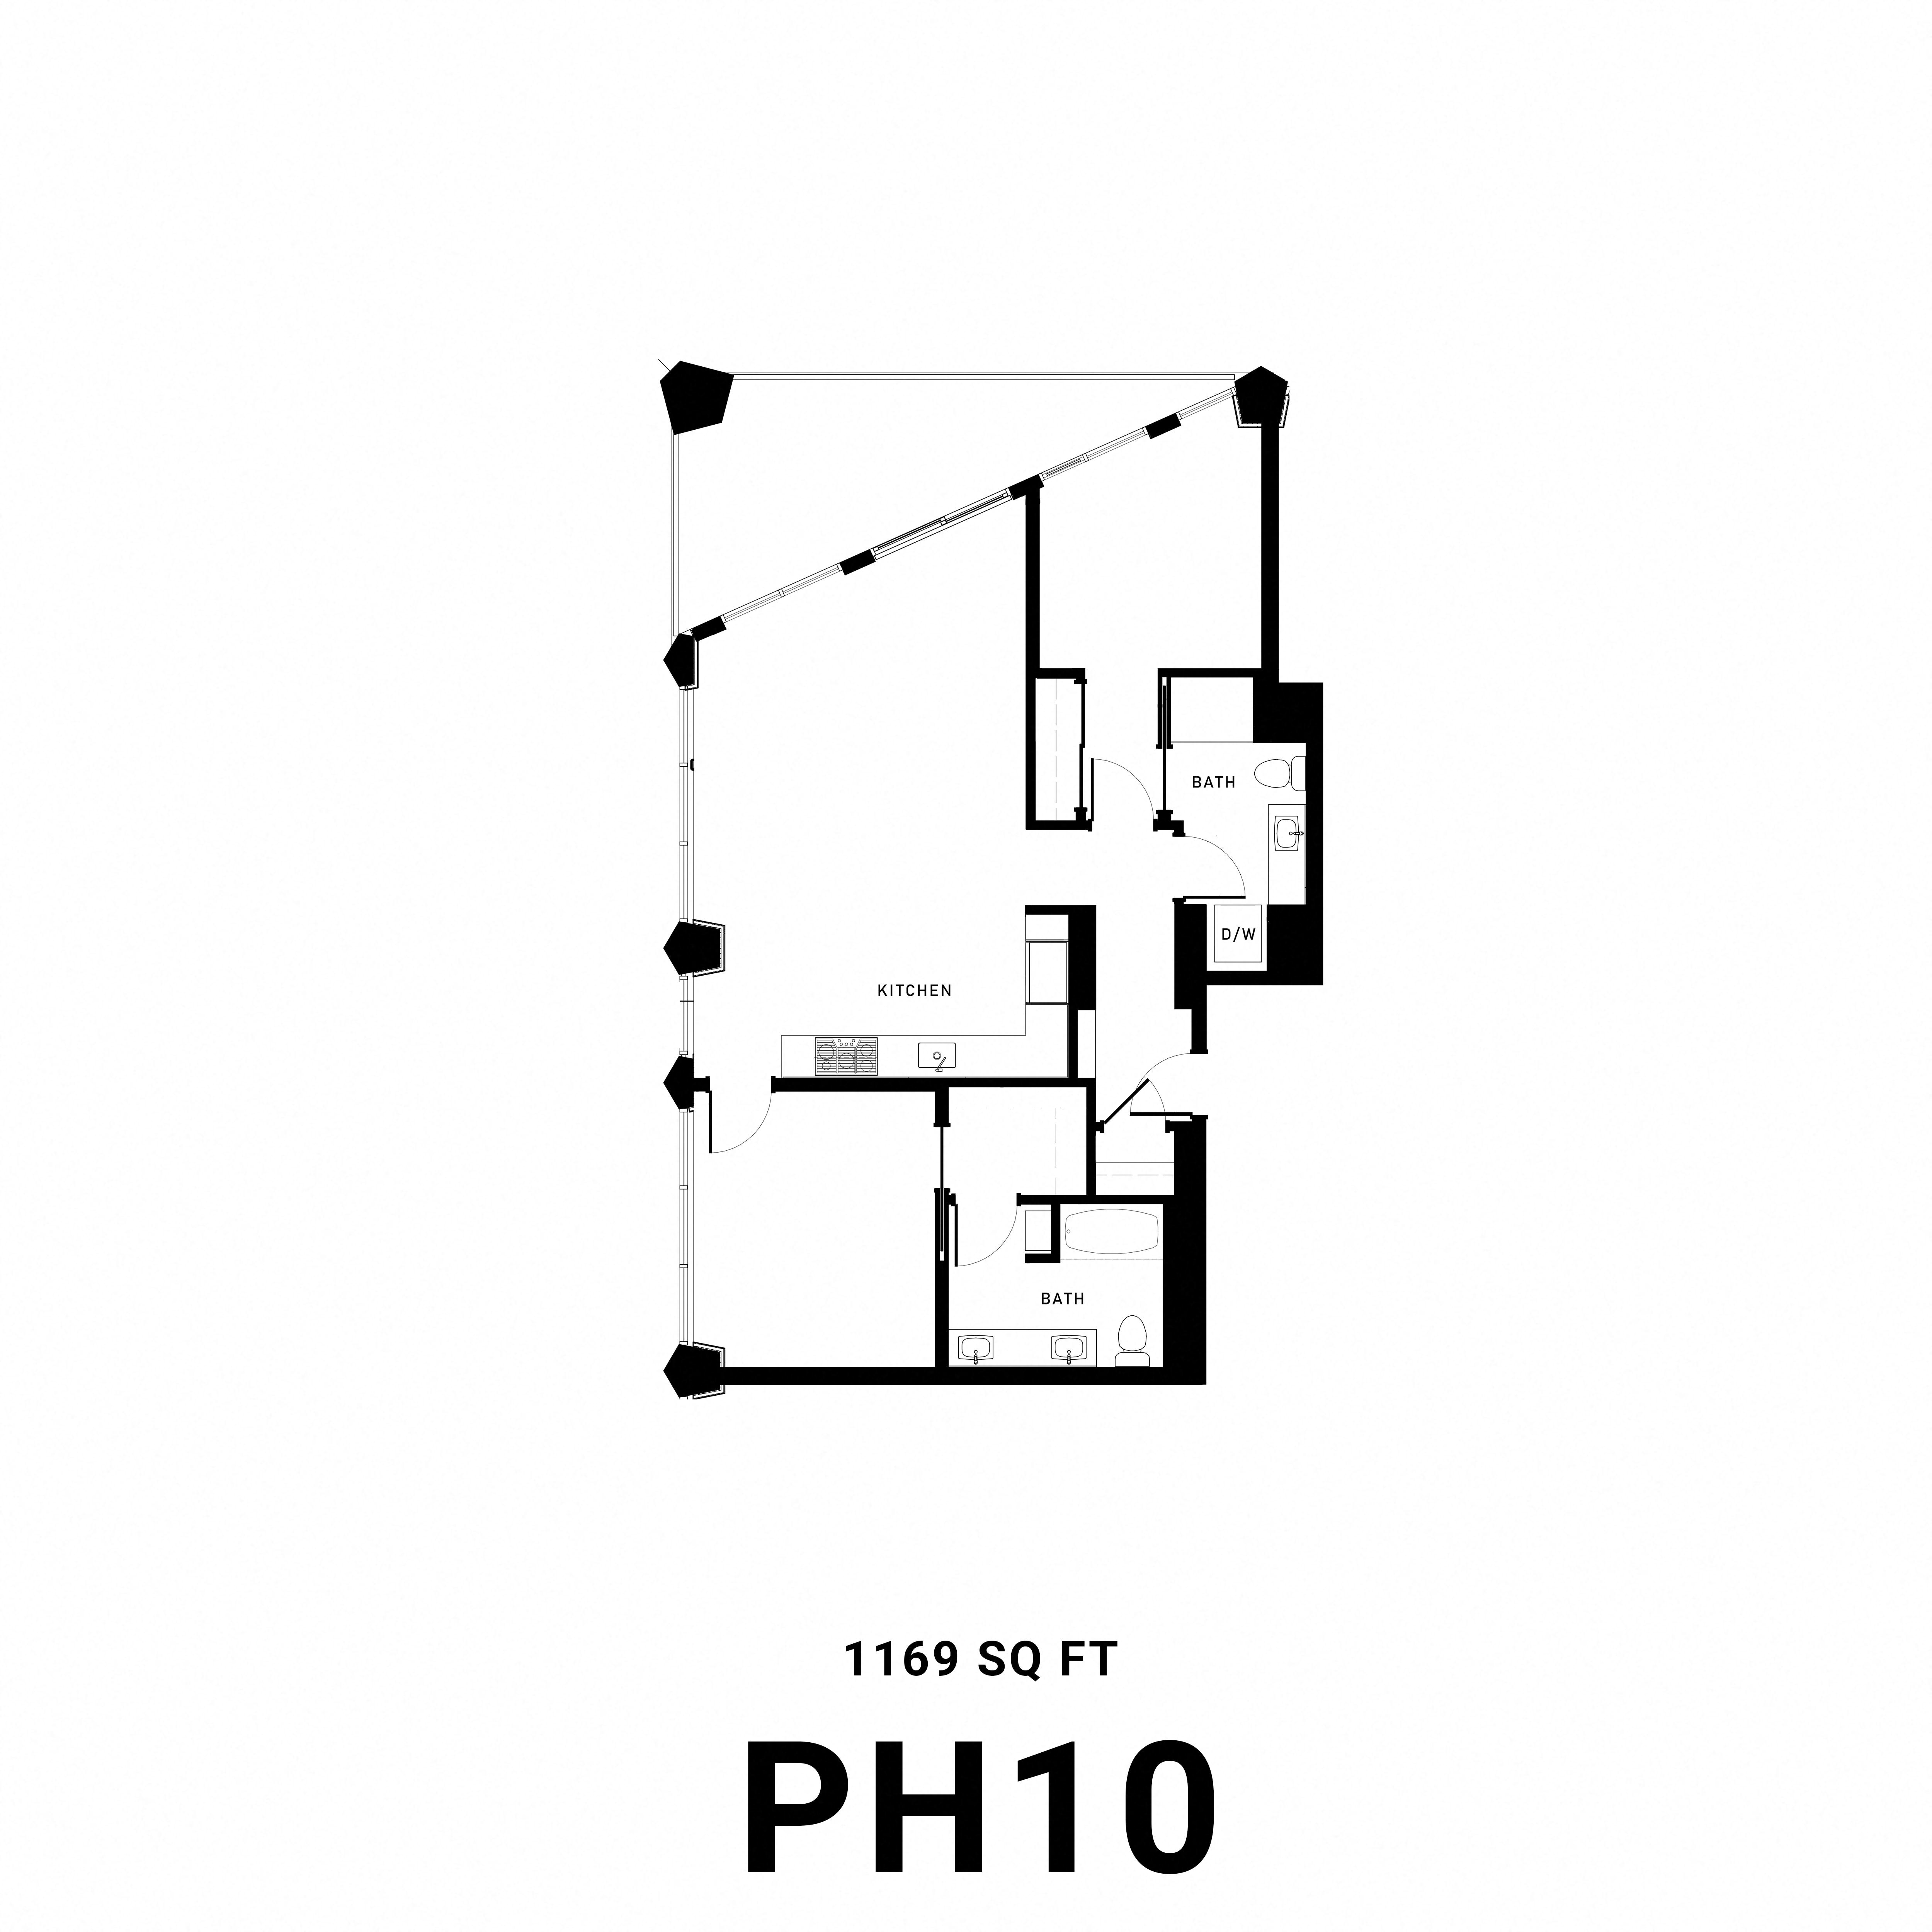 Floorplan PH10